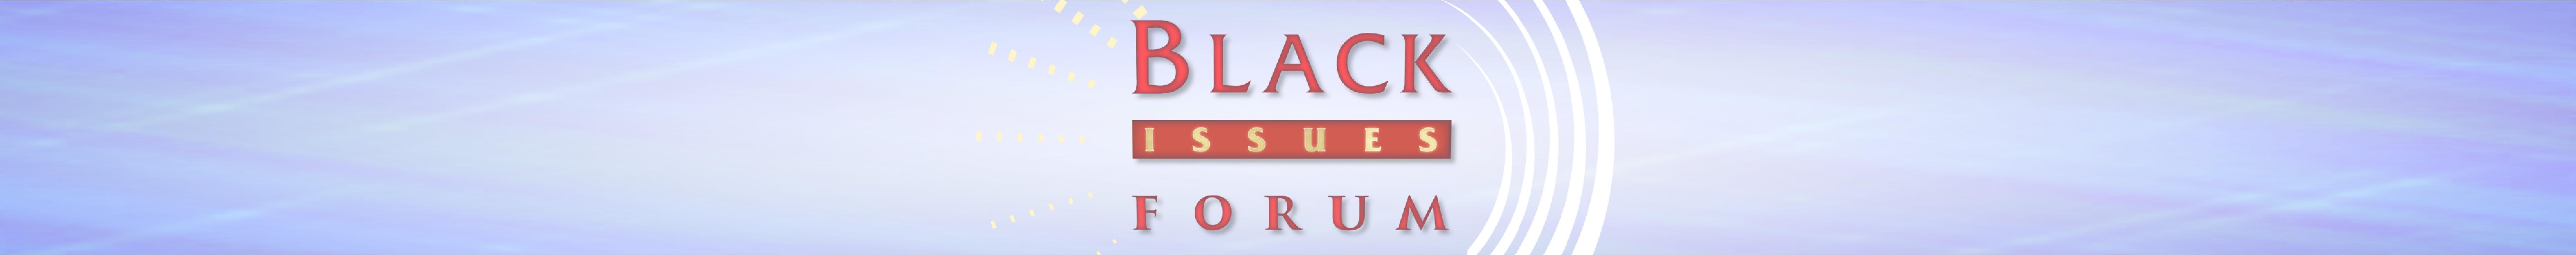 Black Issues Forum Logo Banner